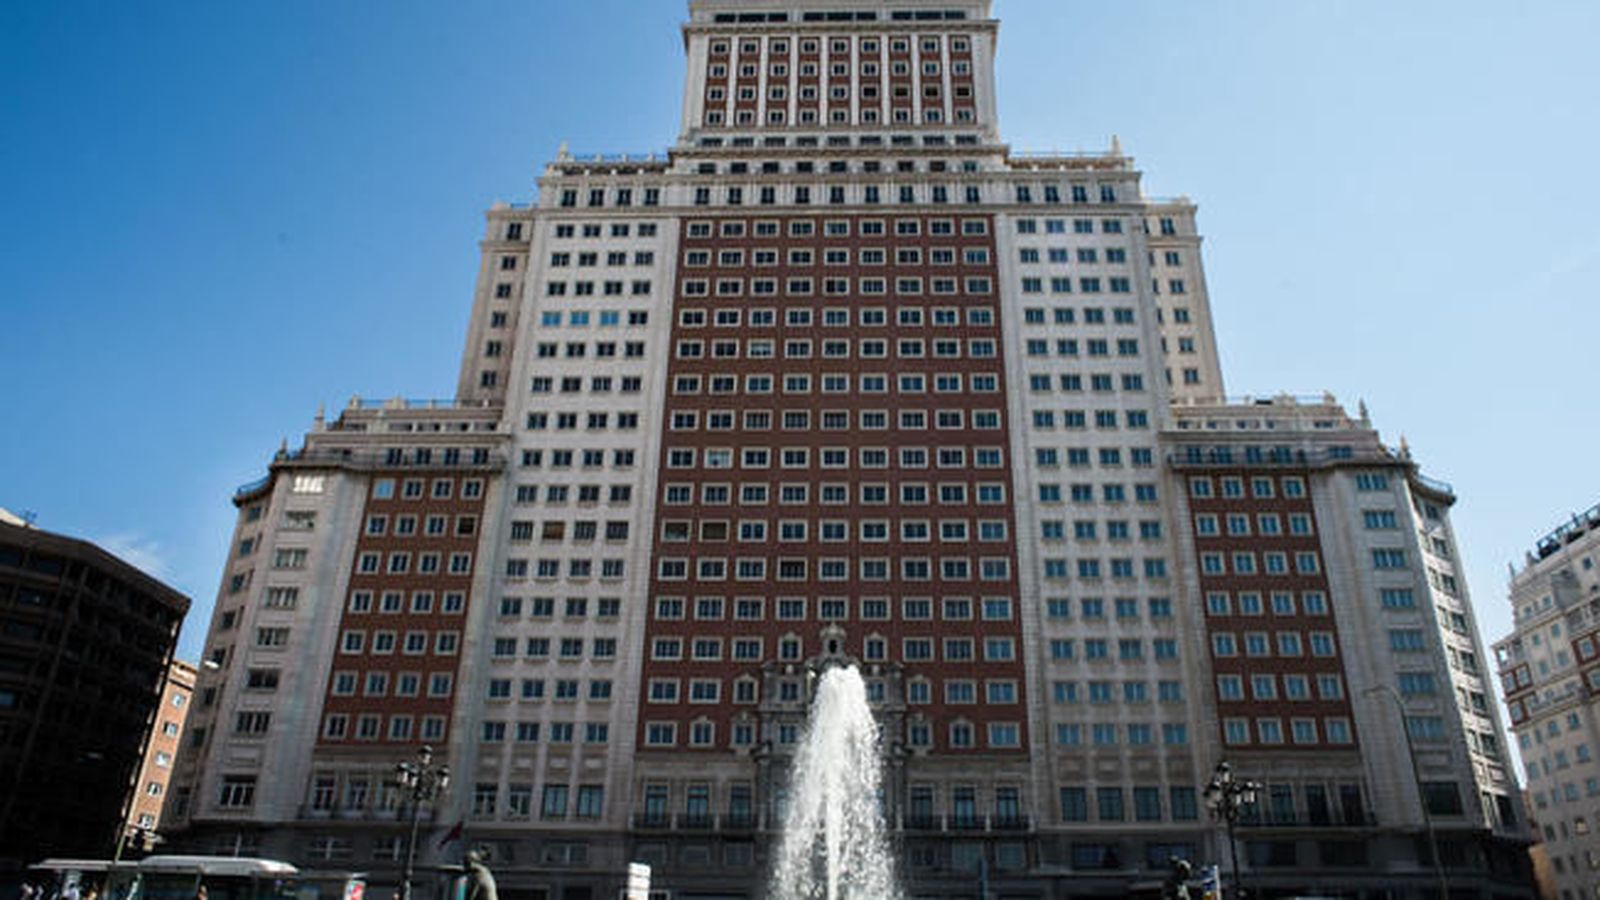 Foto: Edificio de la emblemática Plaza de España de Madrid. (Daniel Muñoz)